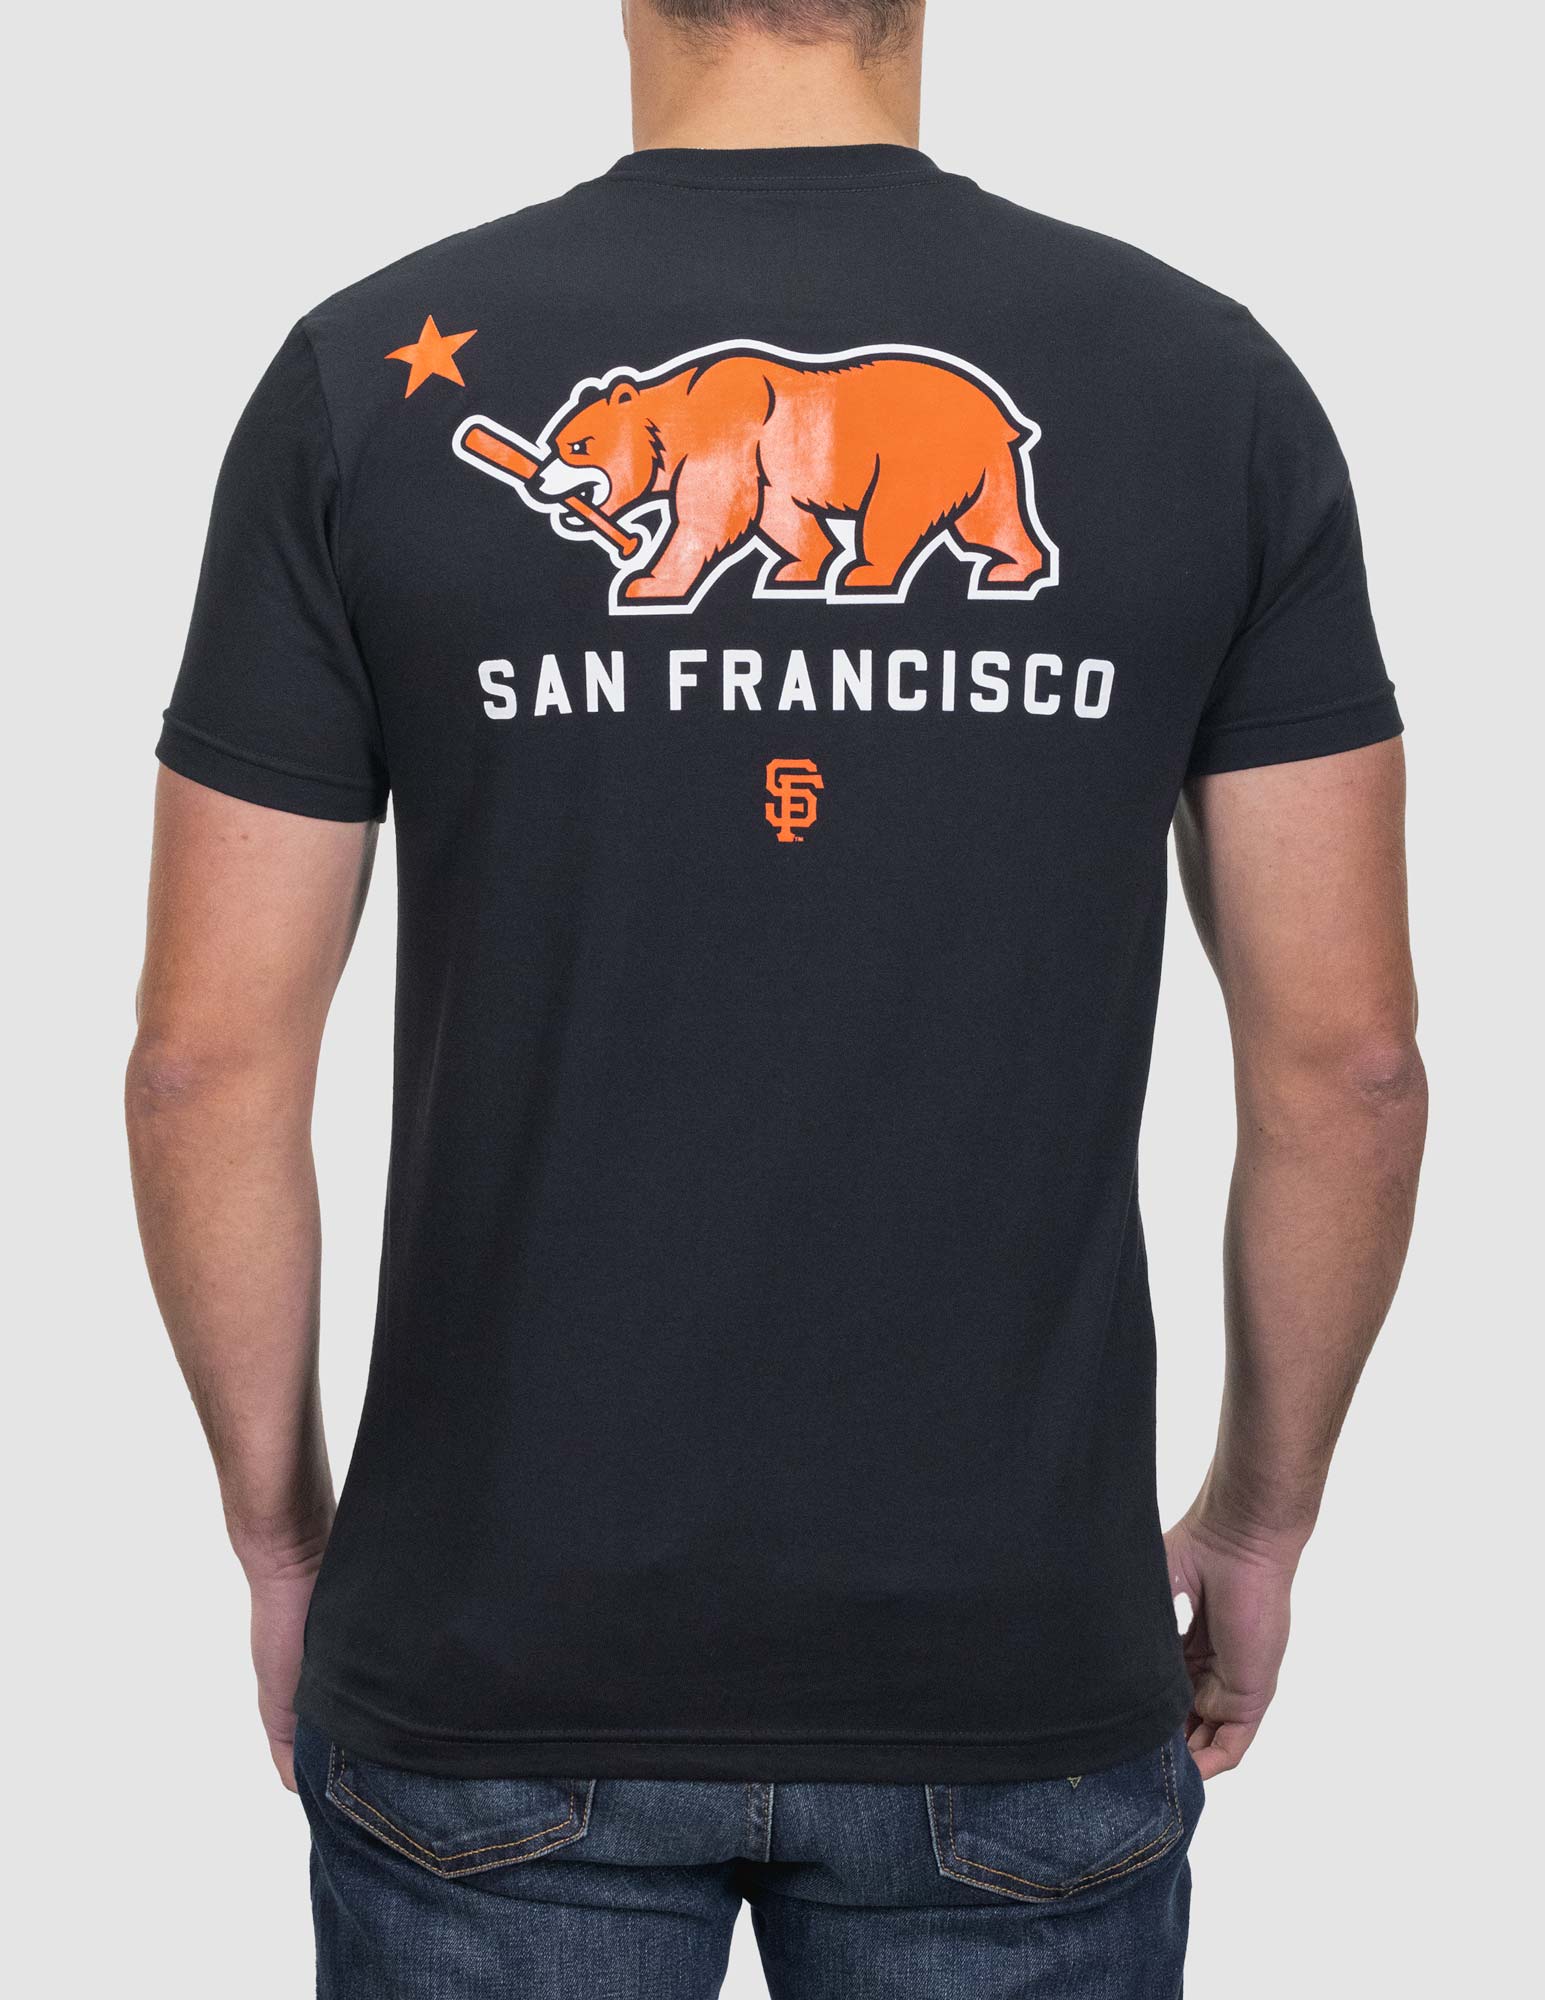 Genuine Merchandise San Francisco Giants Jacket Youth SZ M